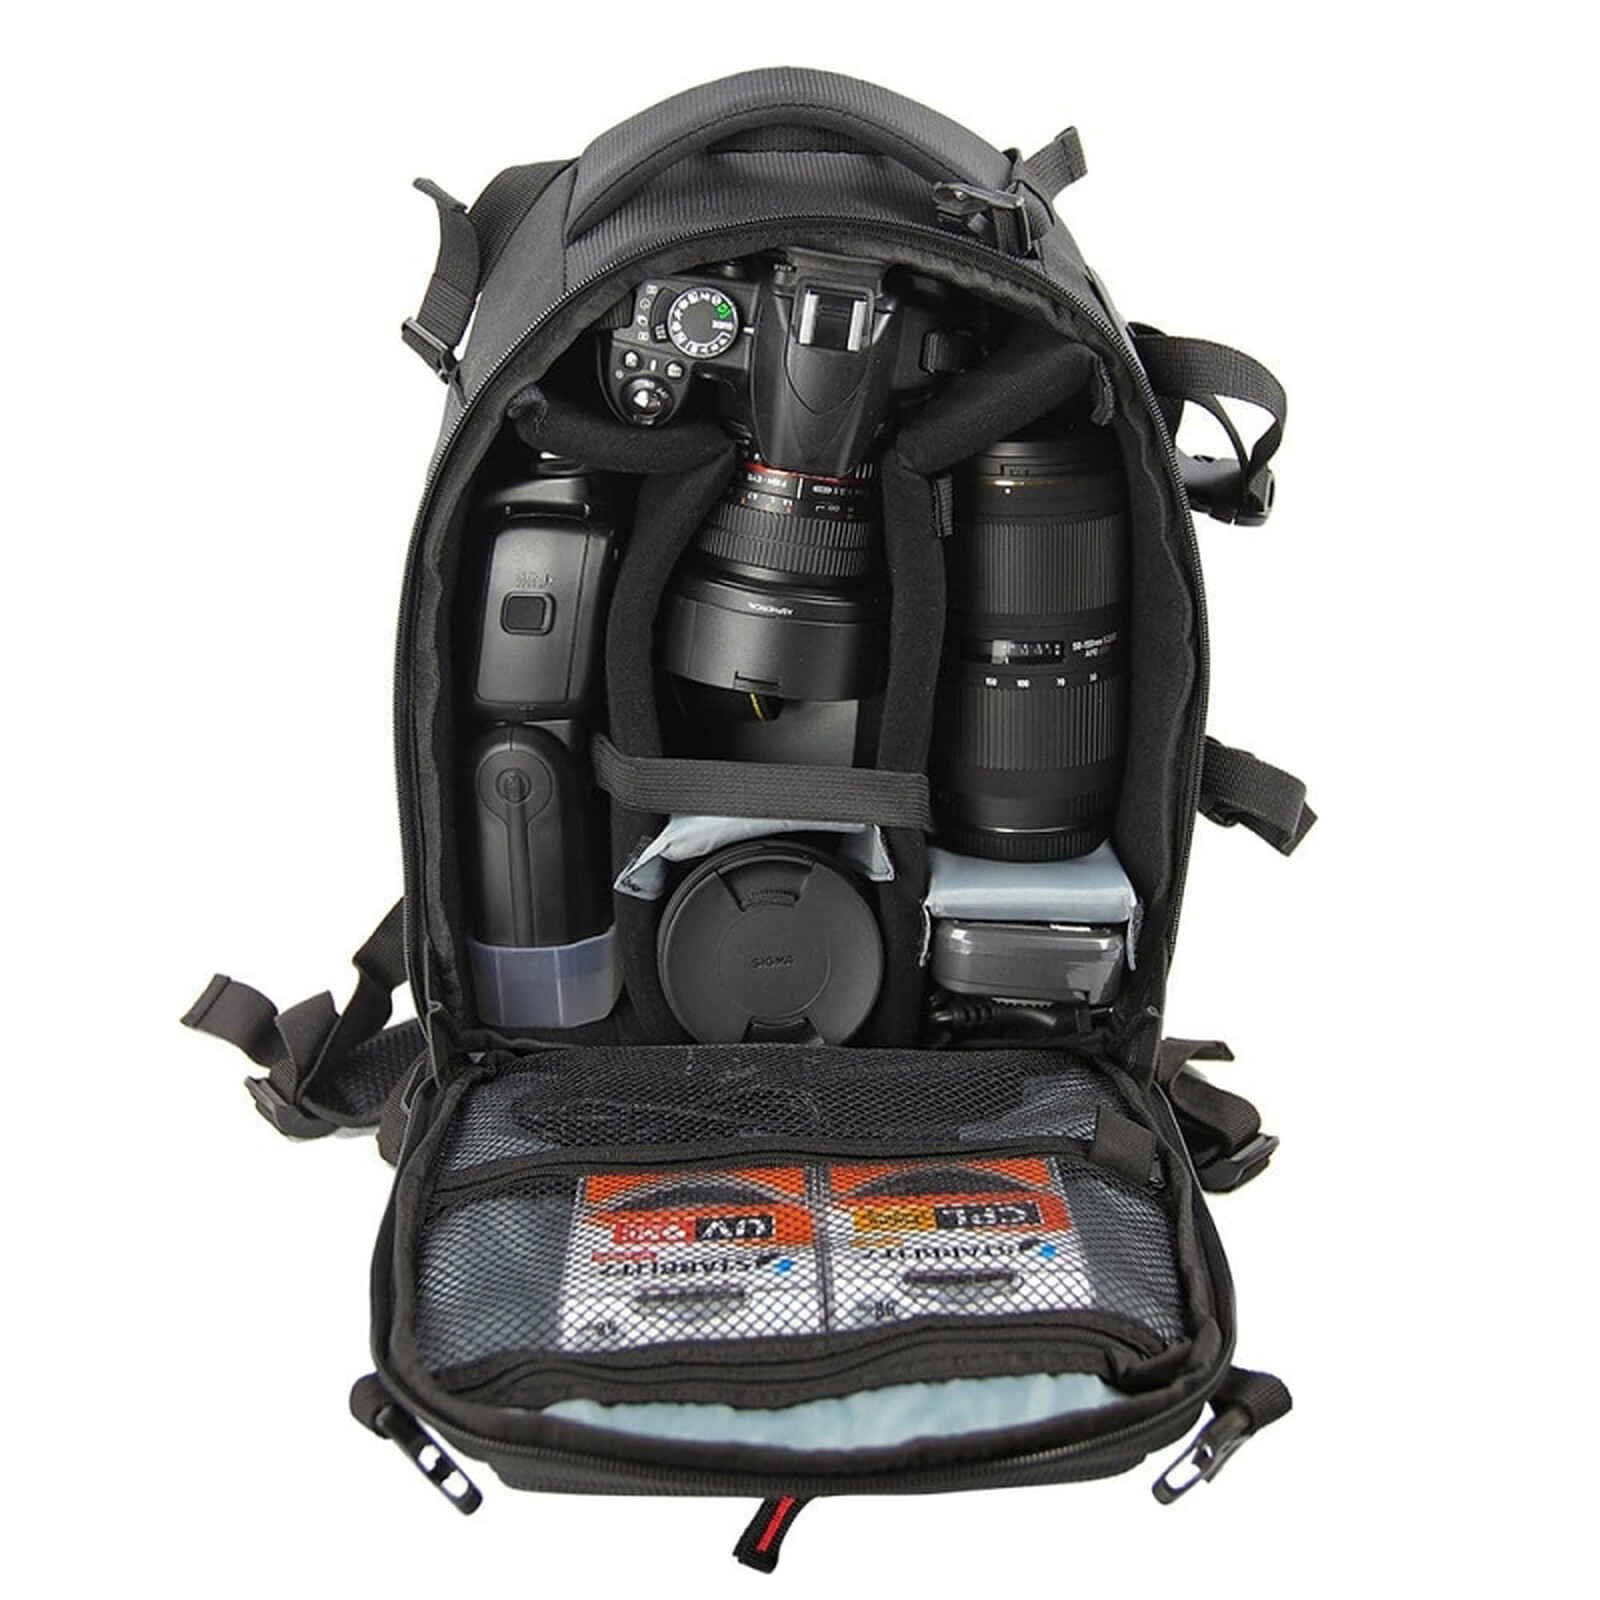 Starblitz WIZZ100 - Camera bag & case - LDLC 3-year warranty